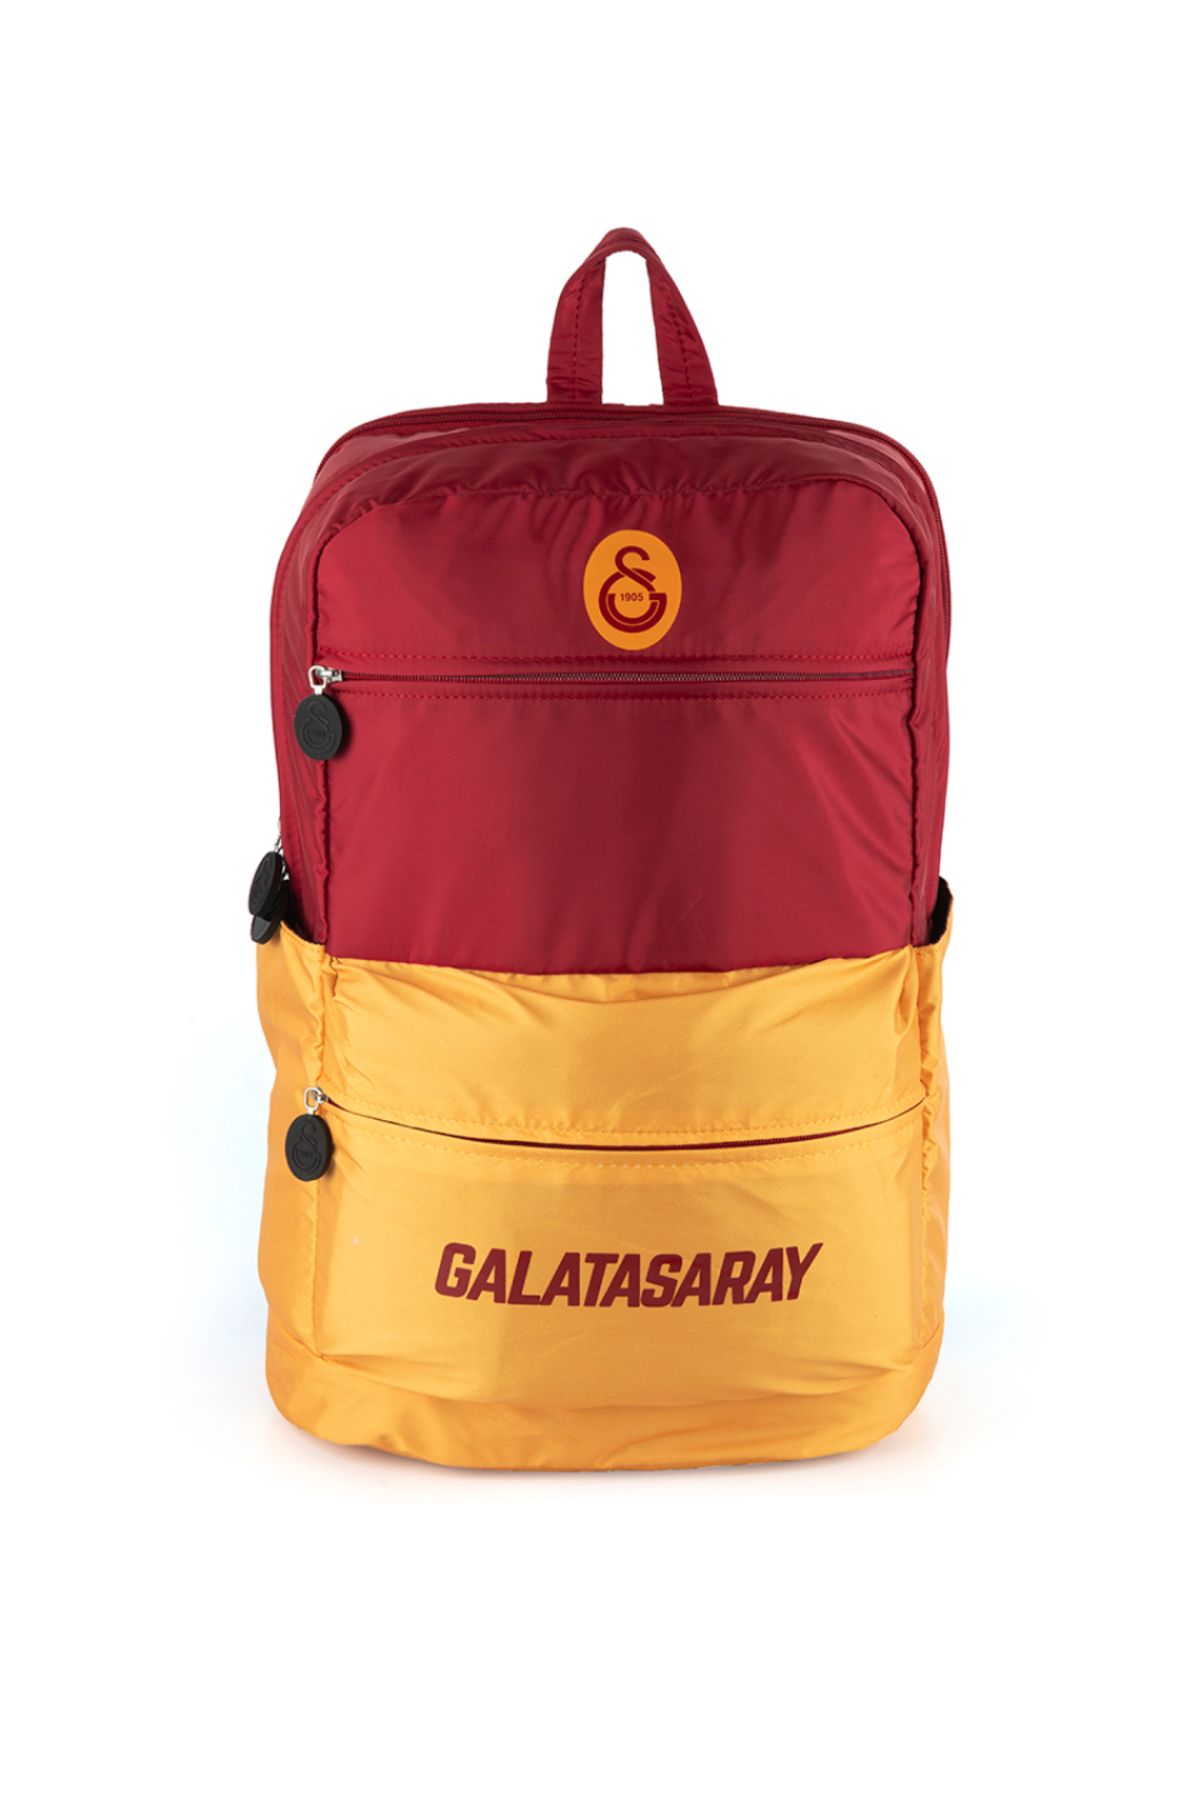 Galatasaray Galatasaray Trend Cepli Paraşüt Sırt Çantası 23532